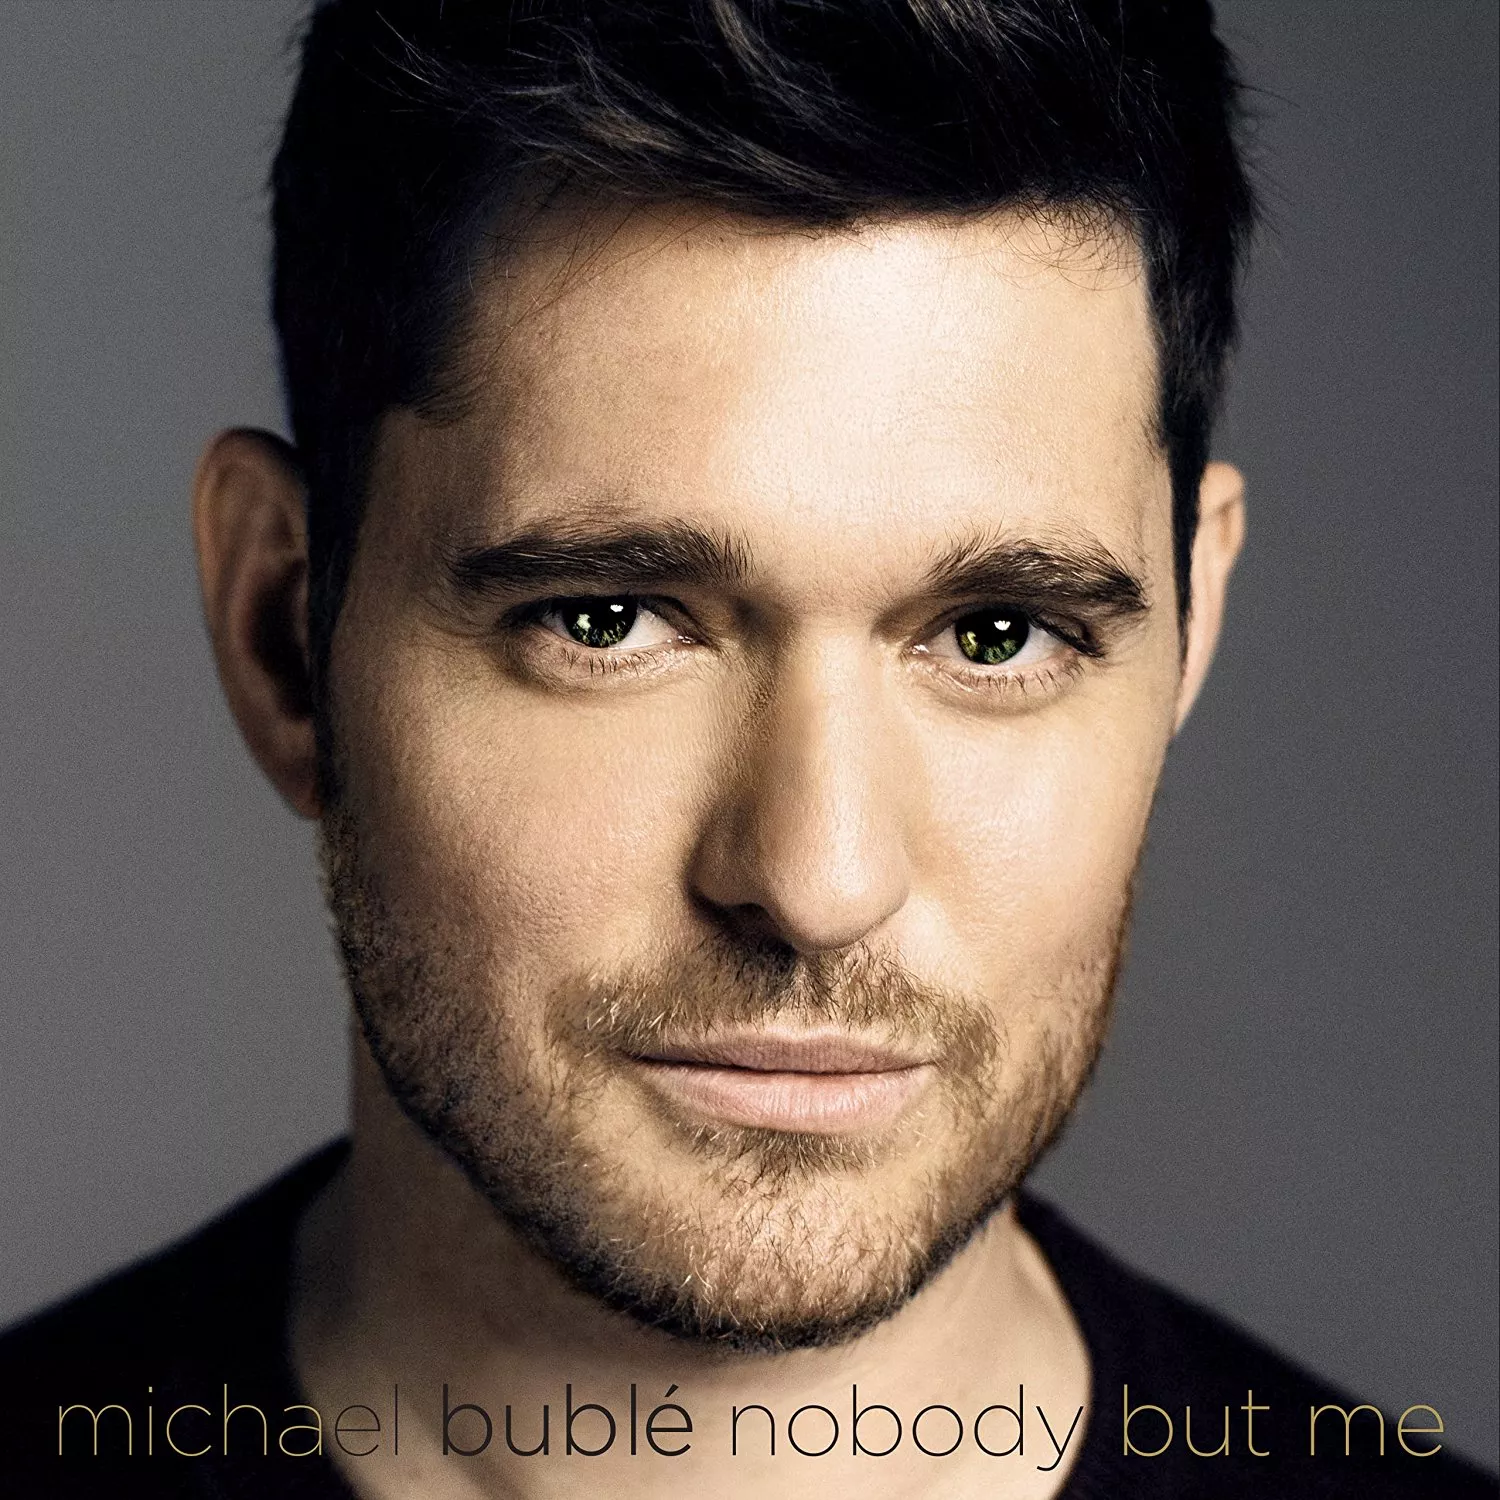 Nobody But Me - Michael Bublé